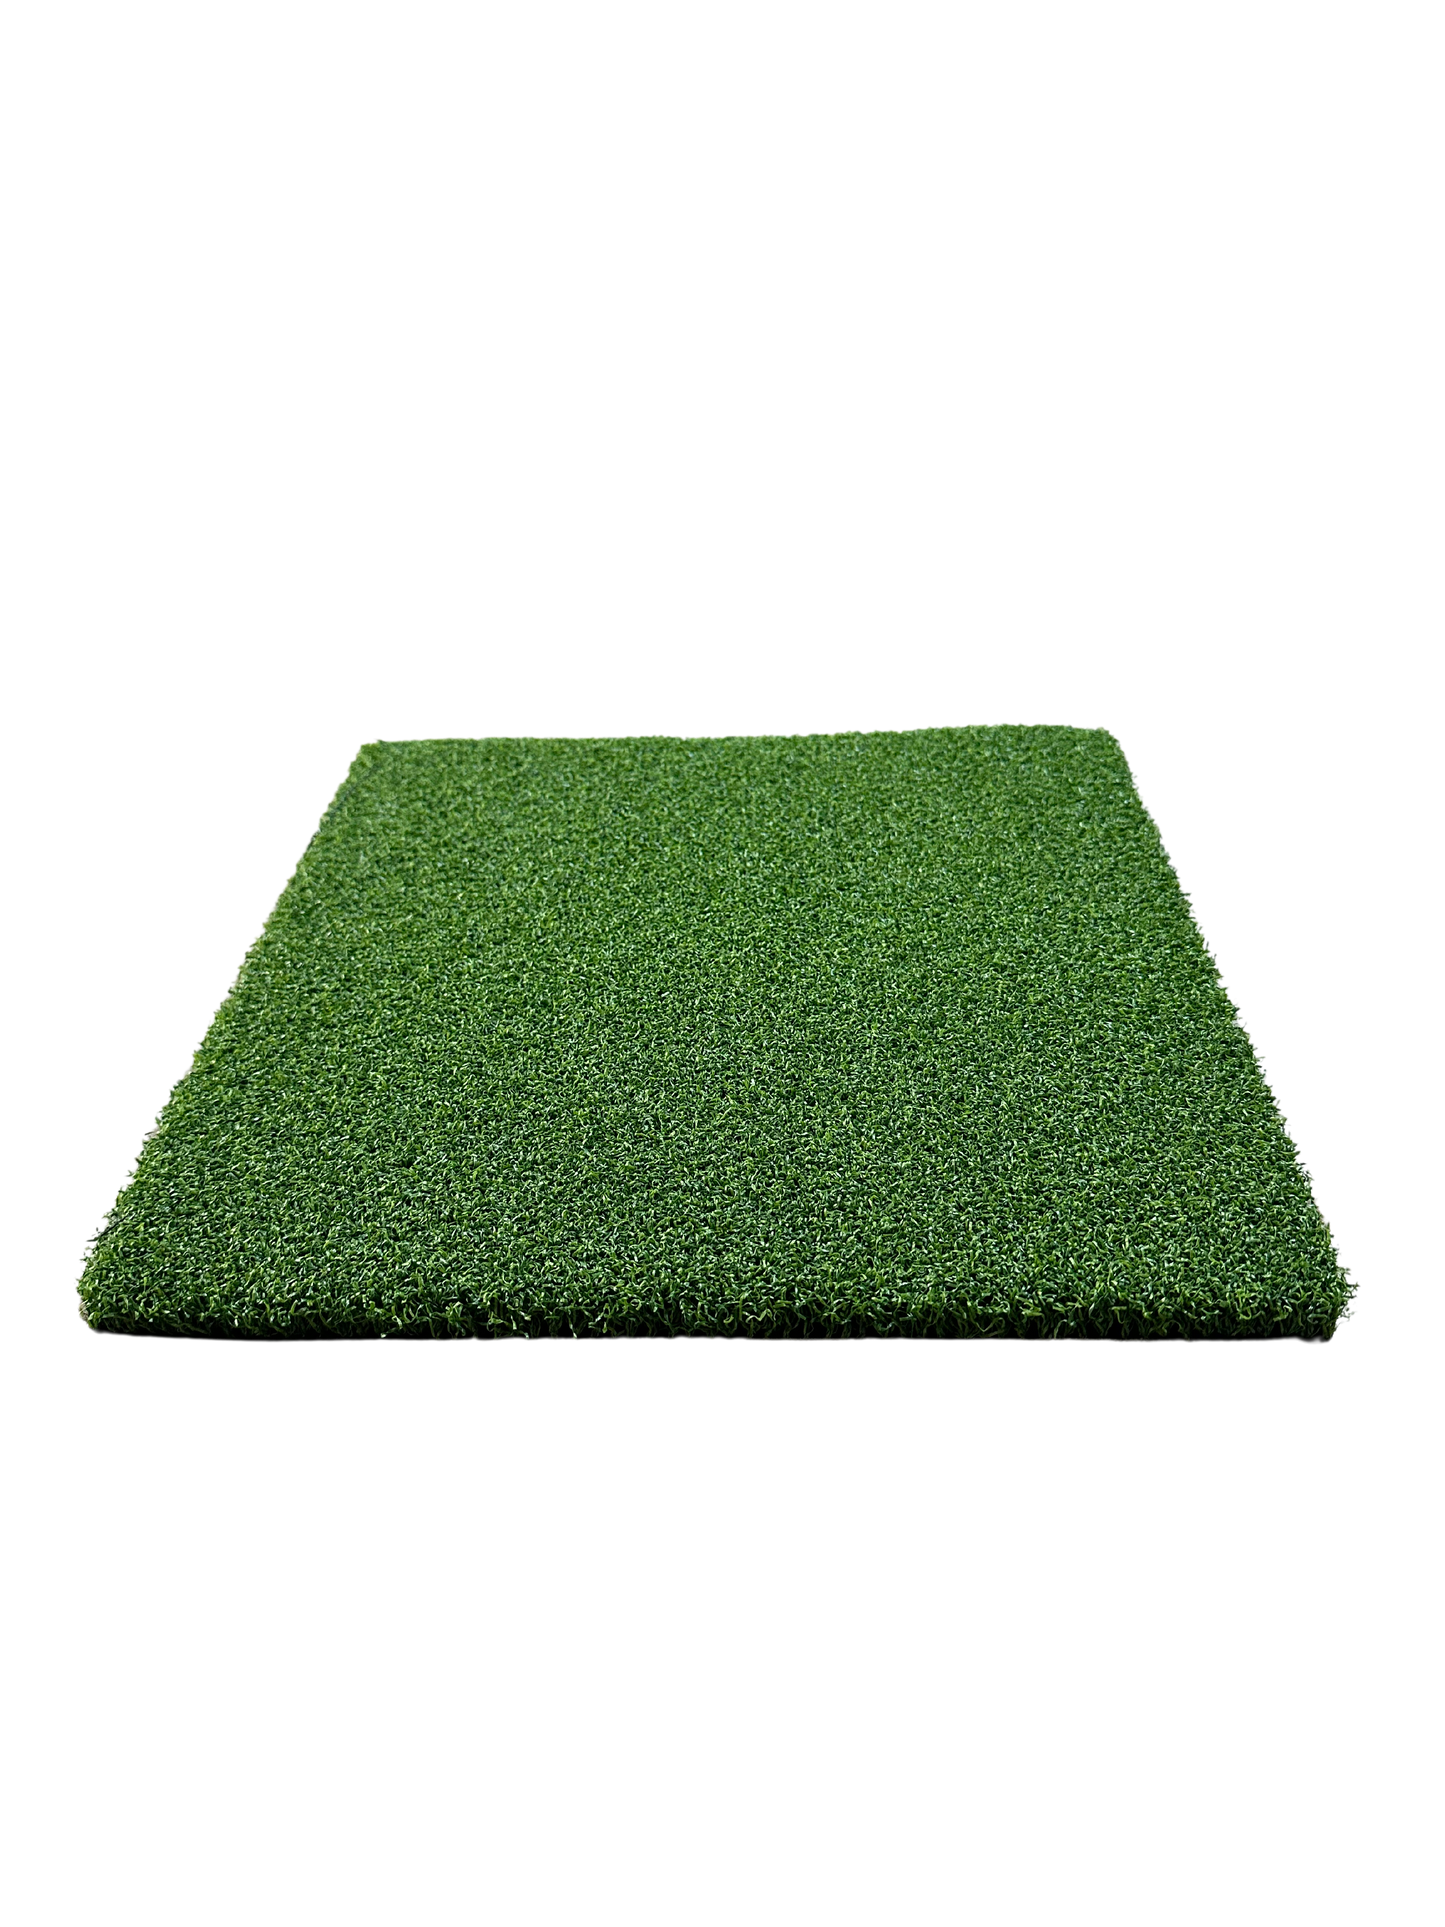 Césped artificial verde golf